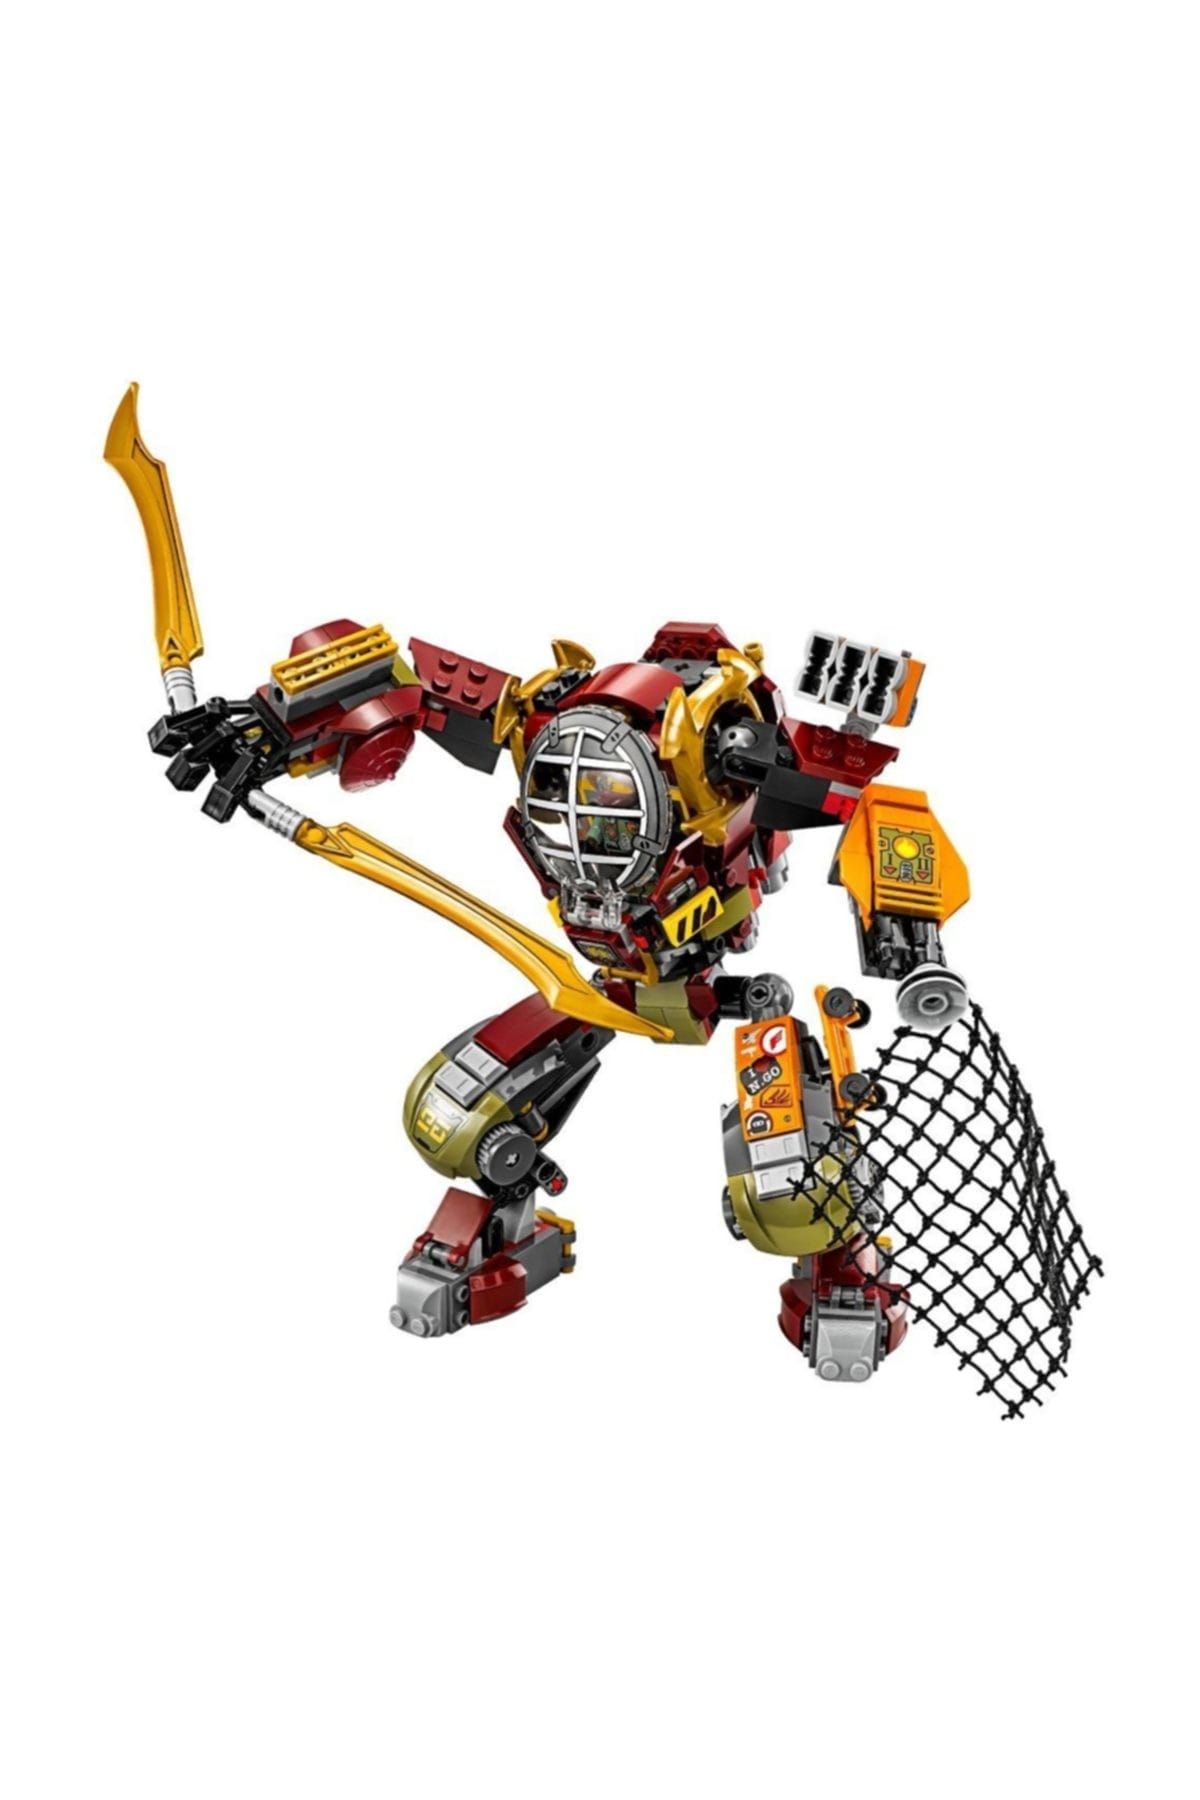 LEGO لگو Ninjago 70592 Salvage M.e.c. /